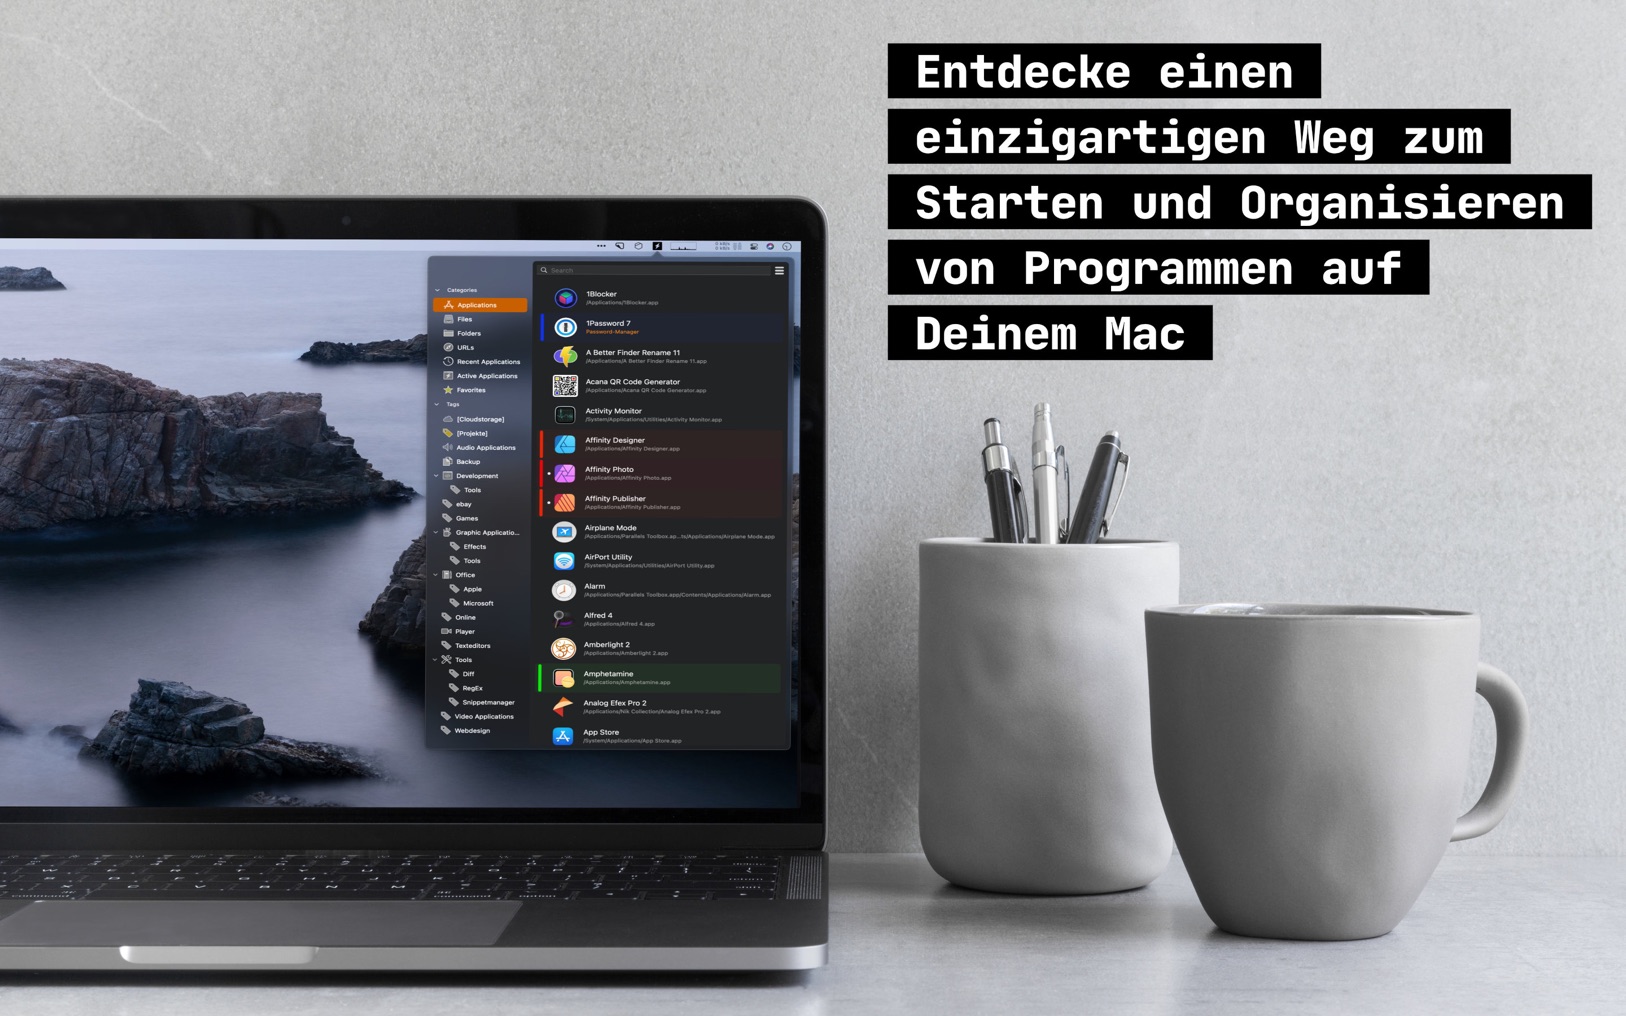 StartAllBack 3.6.10 instal the new version for mac